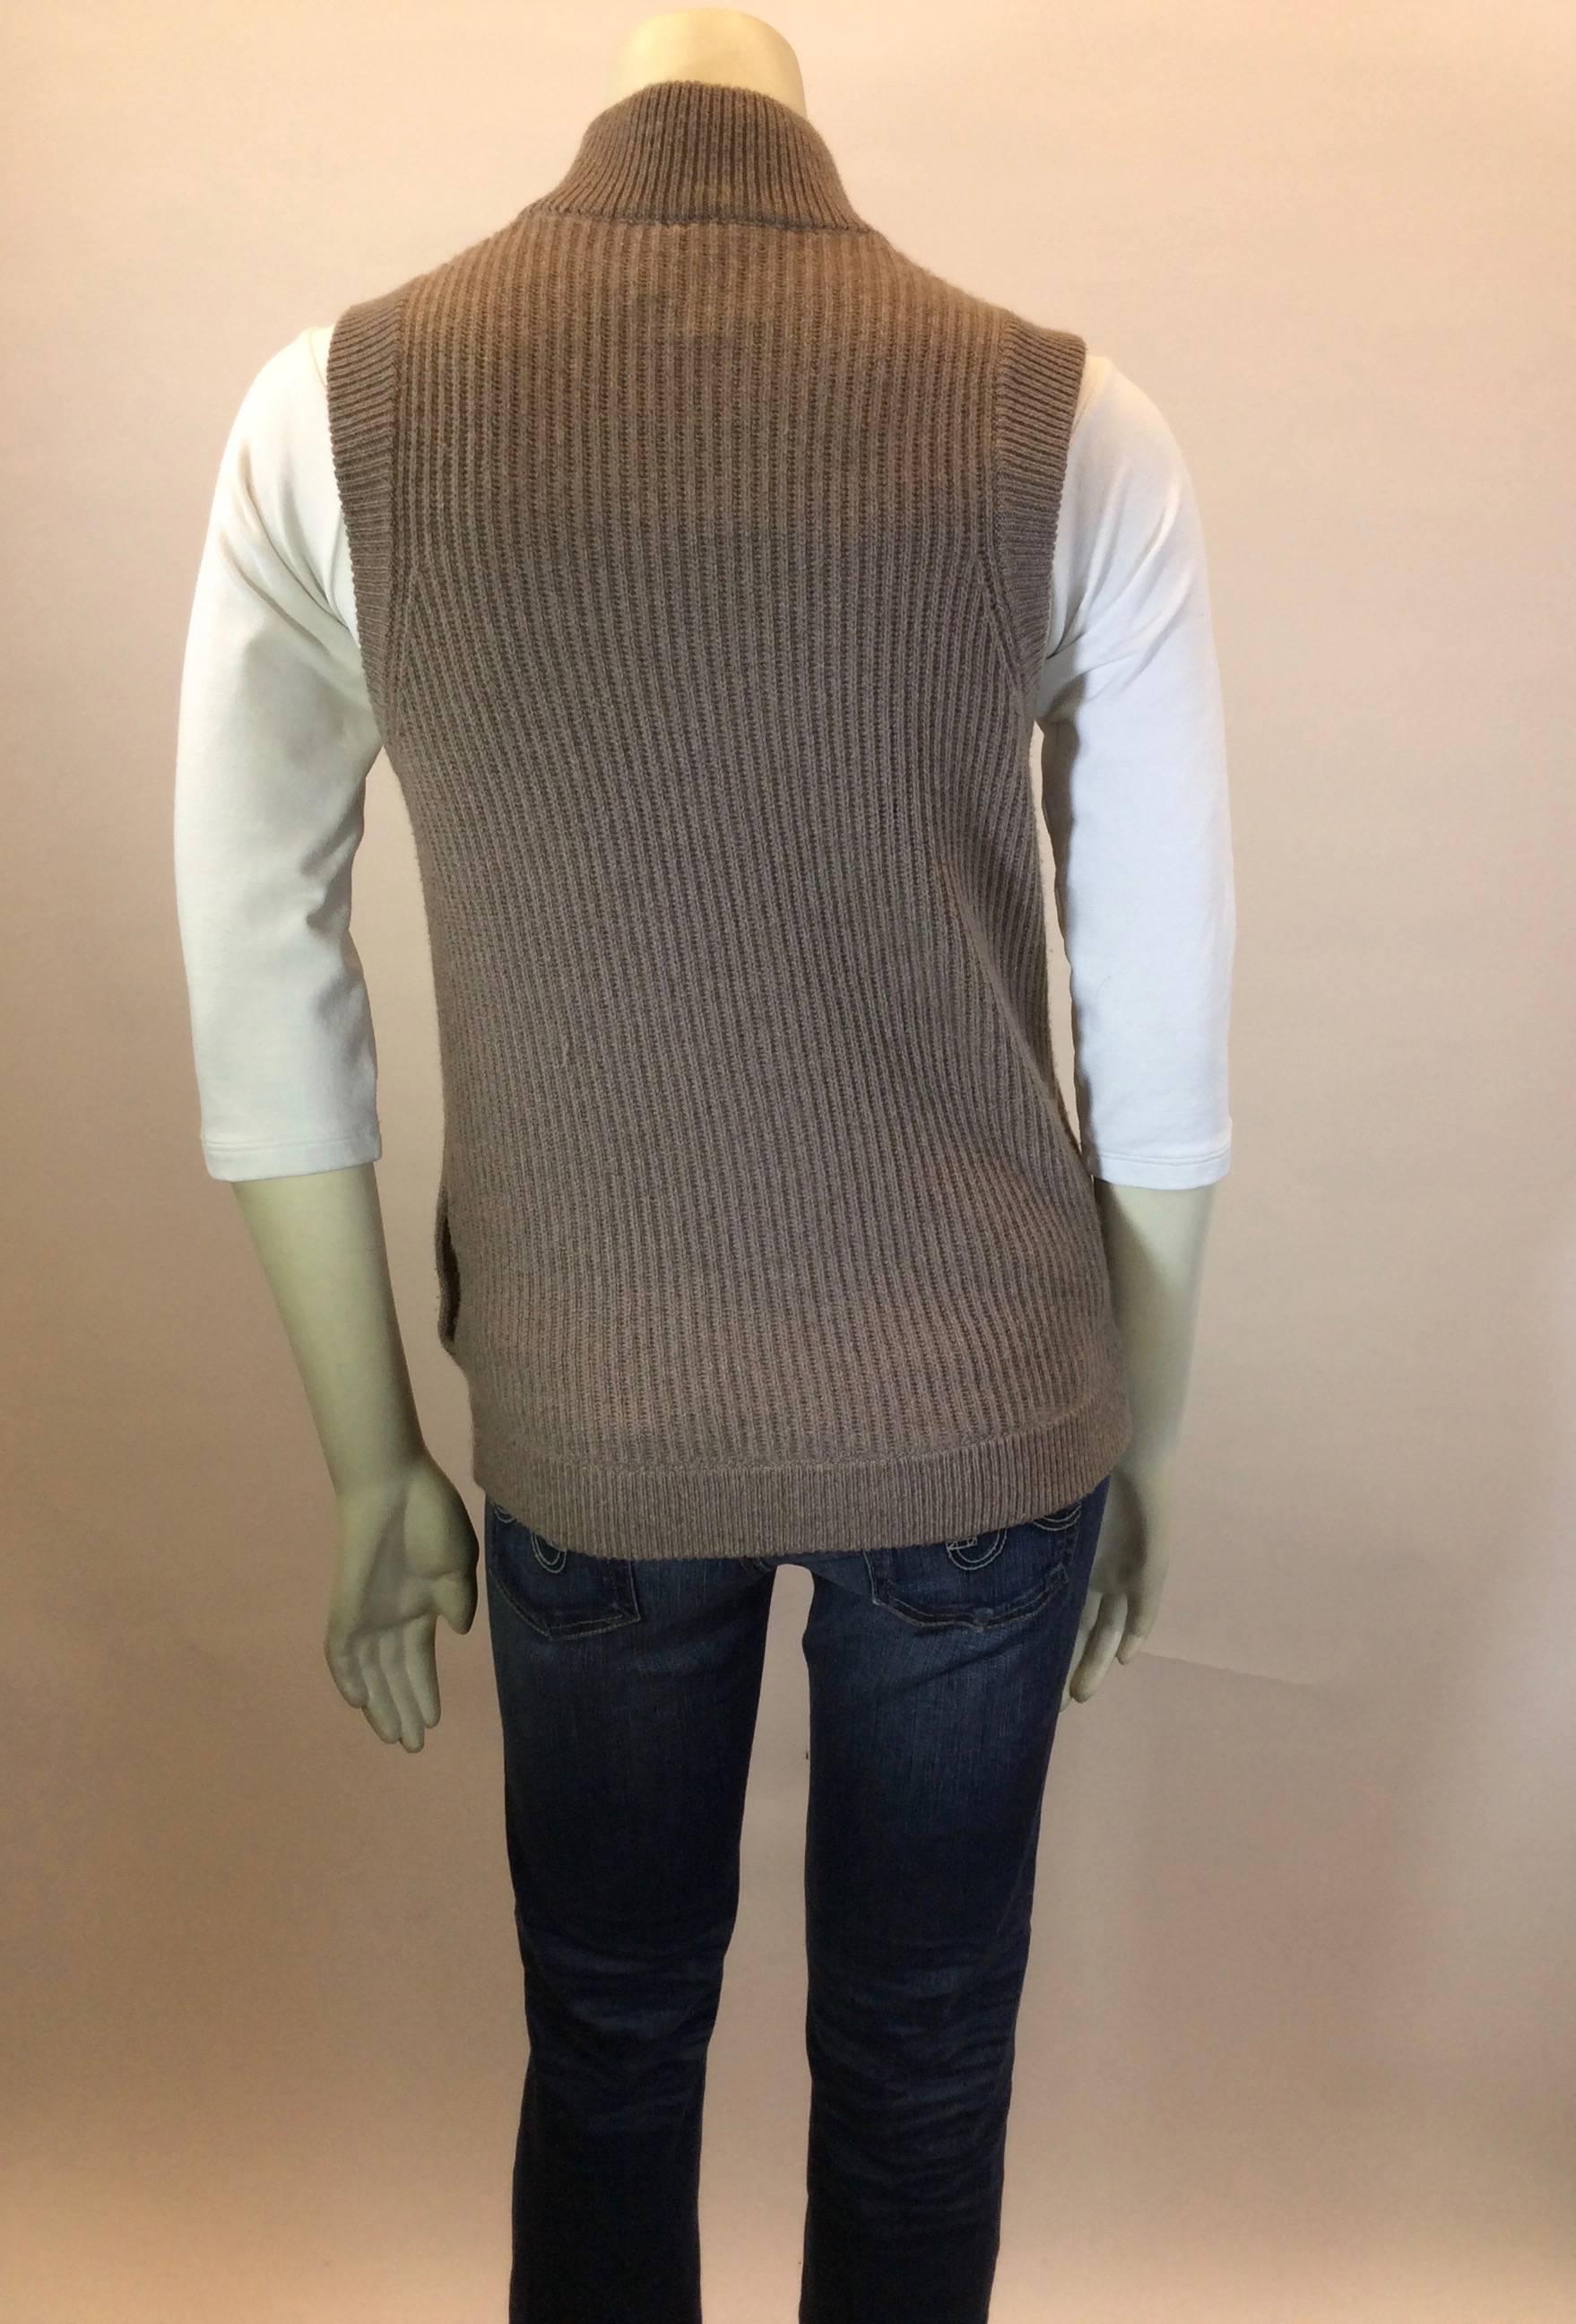 Women's Brunello Cucinelli Light Brown Cashmere Sweater Vest